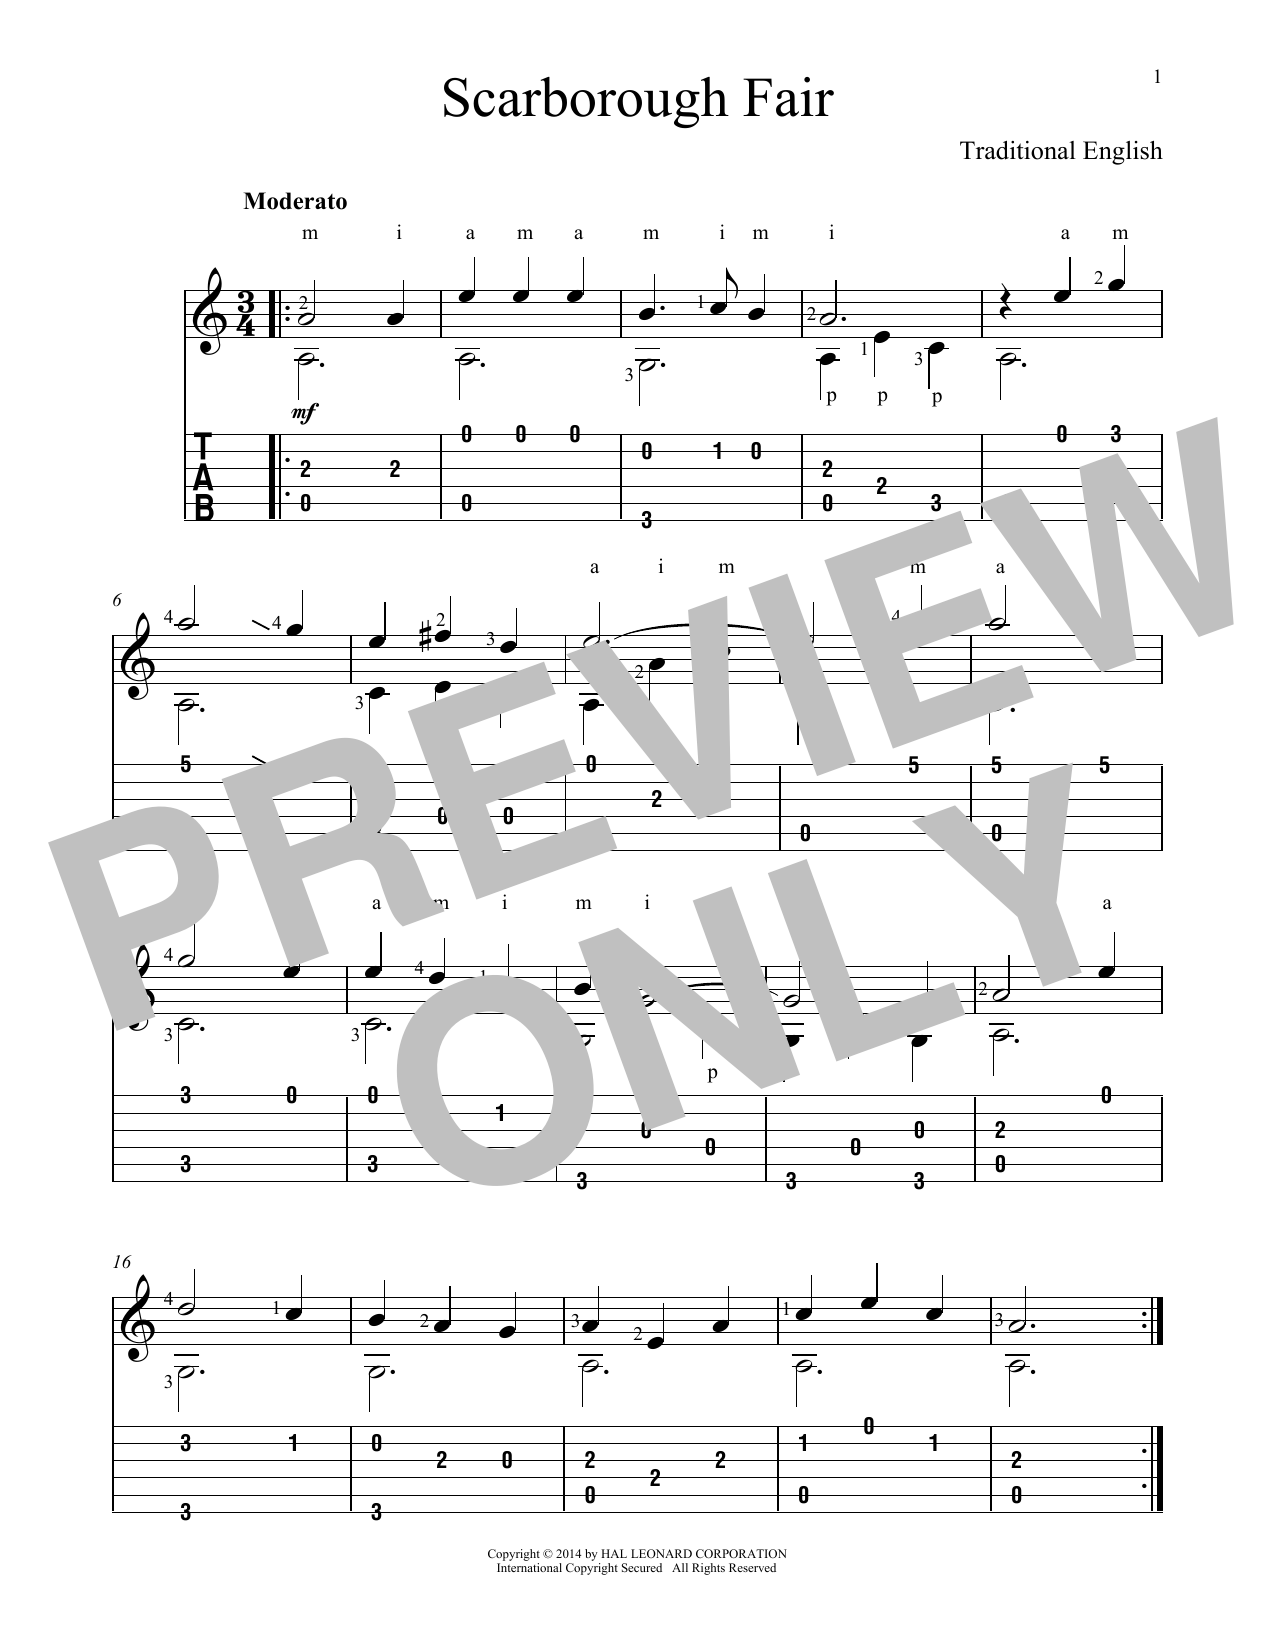 John Hill Scarborough Fair Sheet Music Notes & Chords for Guitar Tab - Download or Print PDF